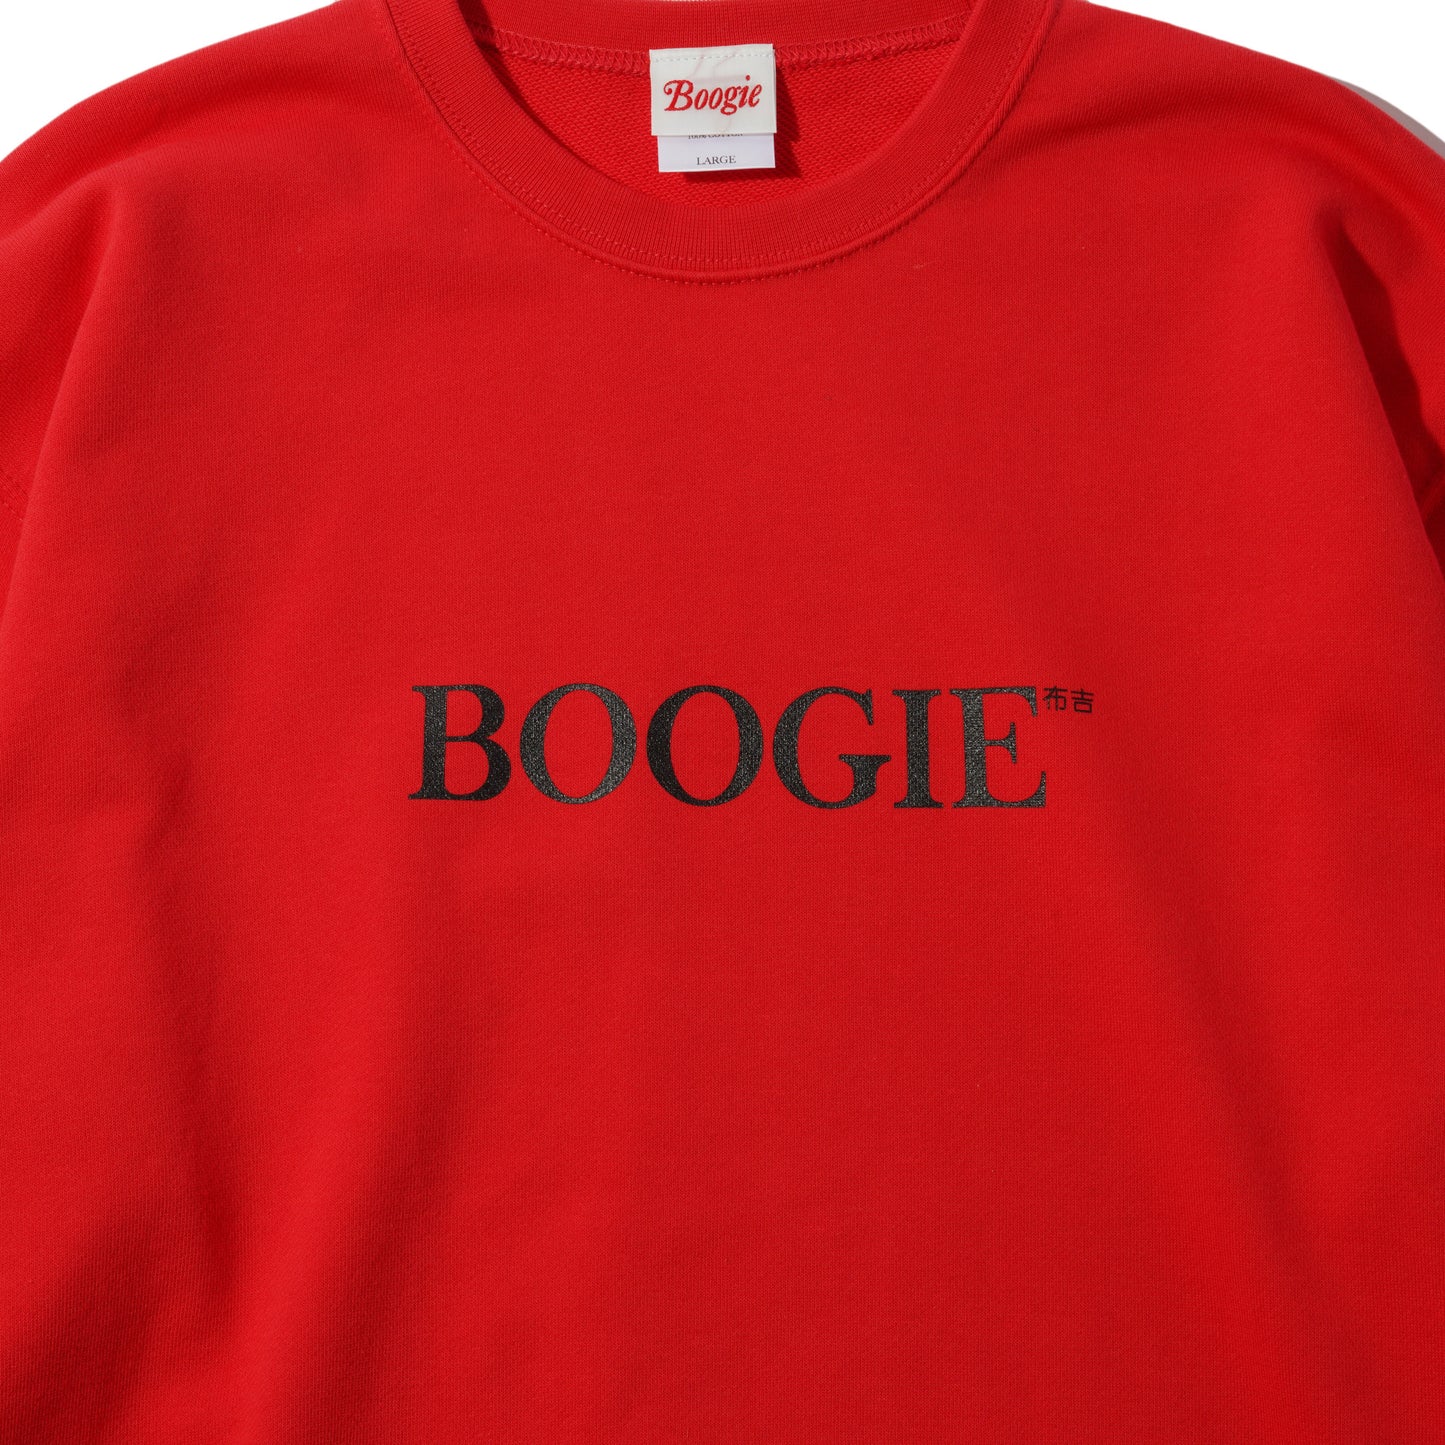 Boogie Crewneck Sweater